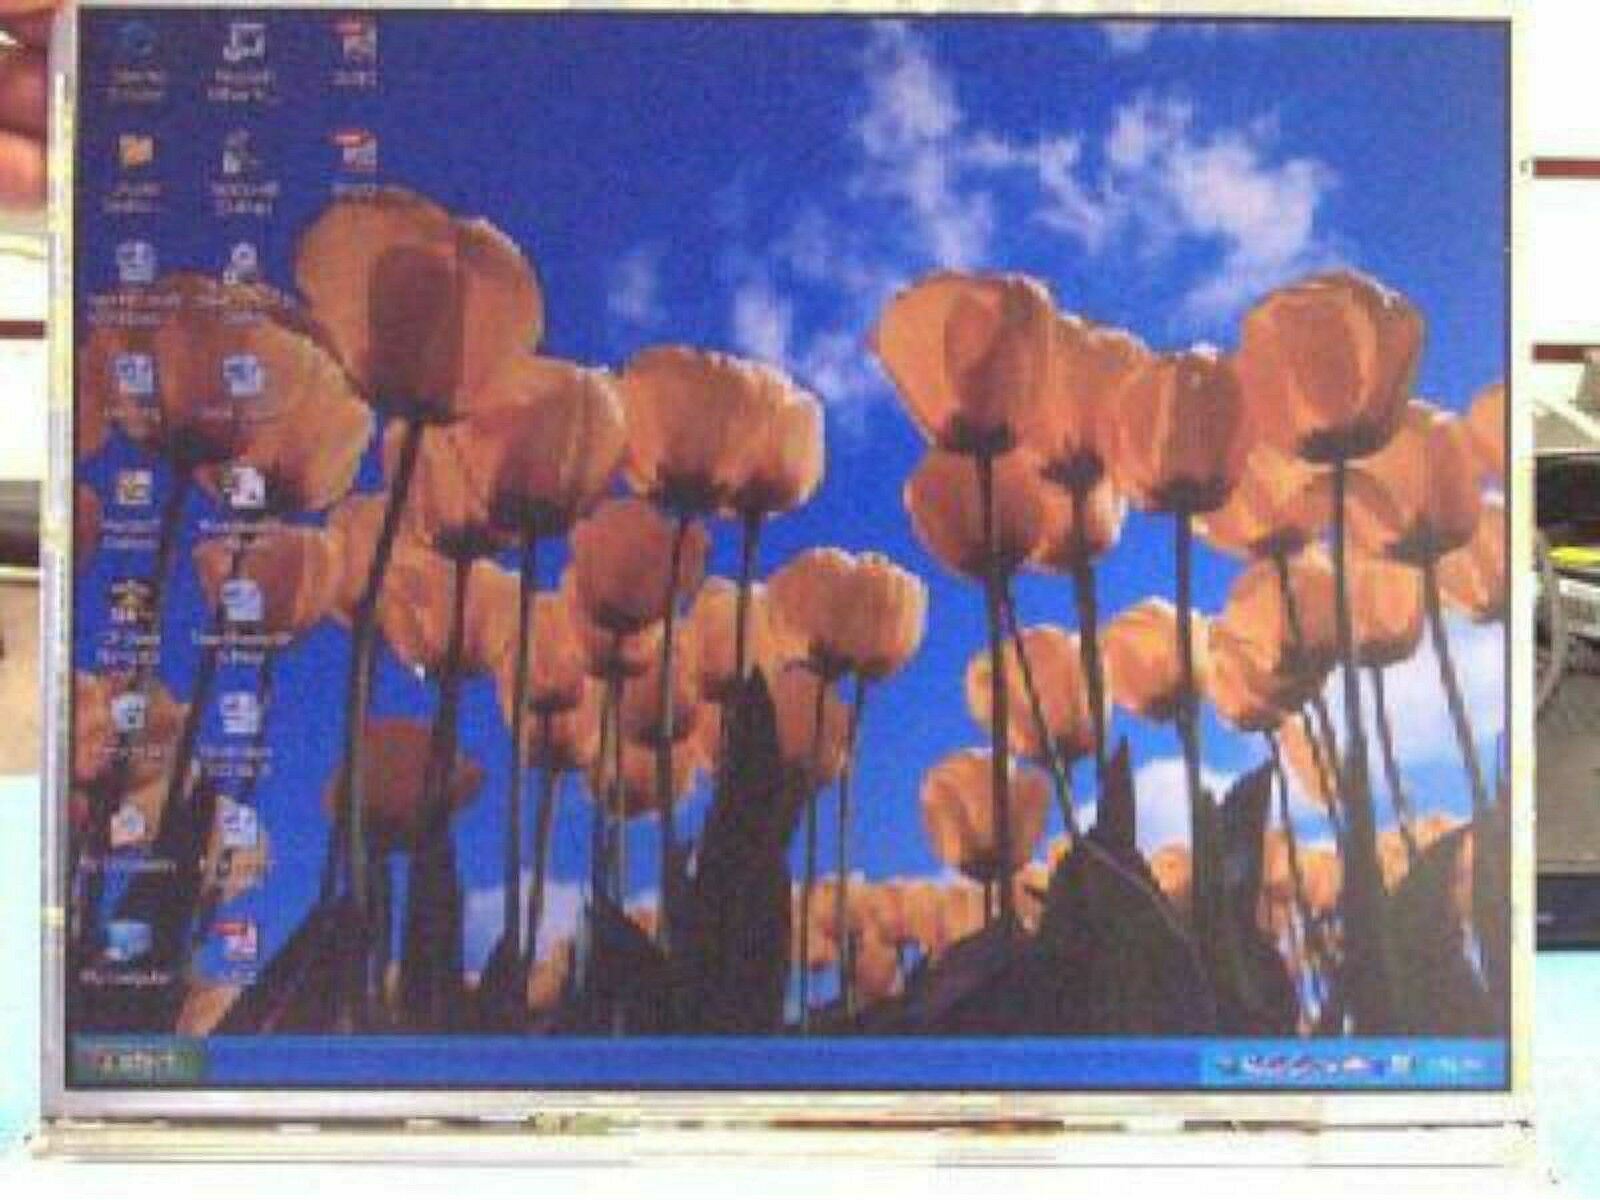 Sony Vaio PCG-FXA32 FXA33 FXA36 Laptop 15 LCD LTM15C459 notebook display - $42.27